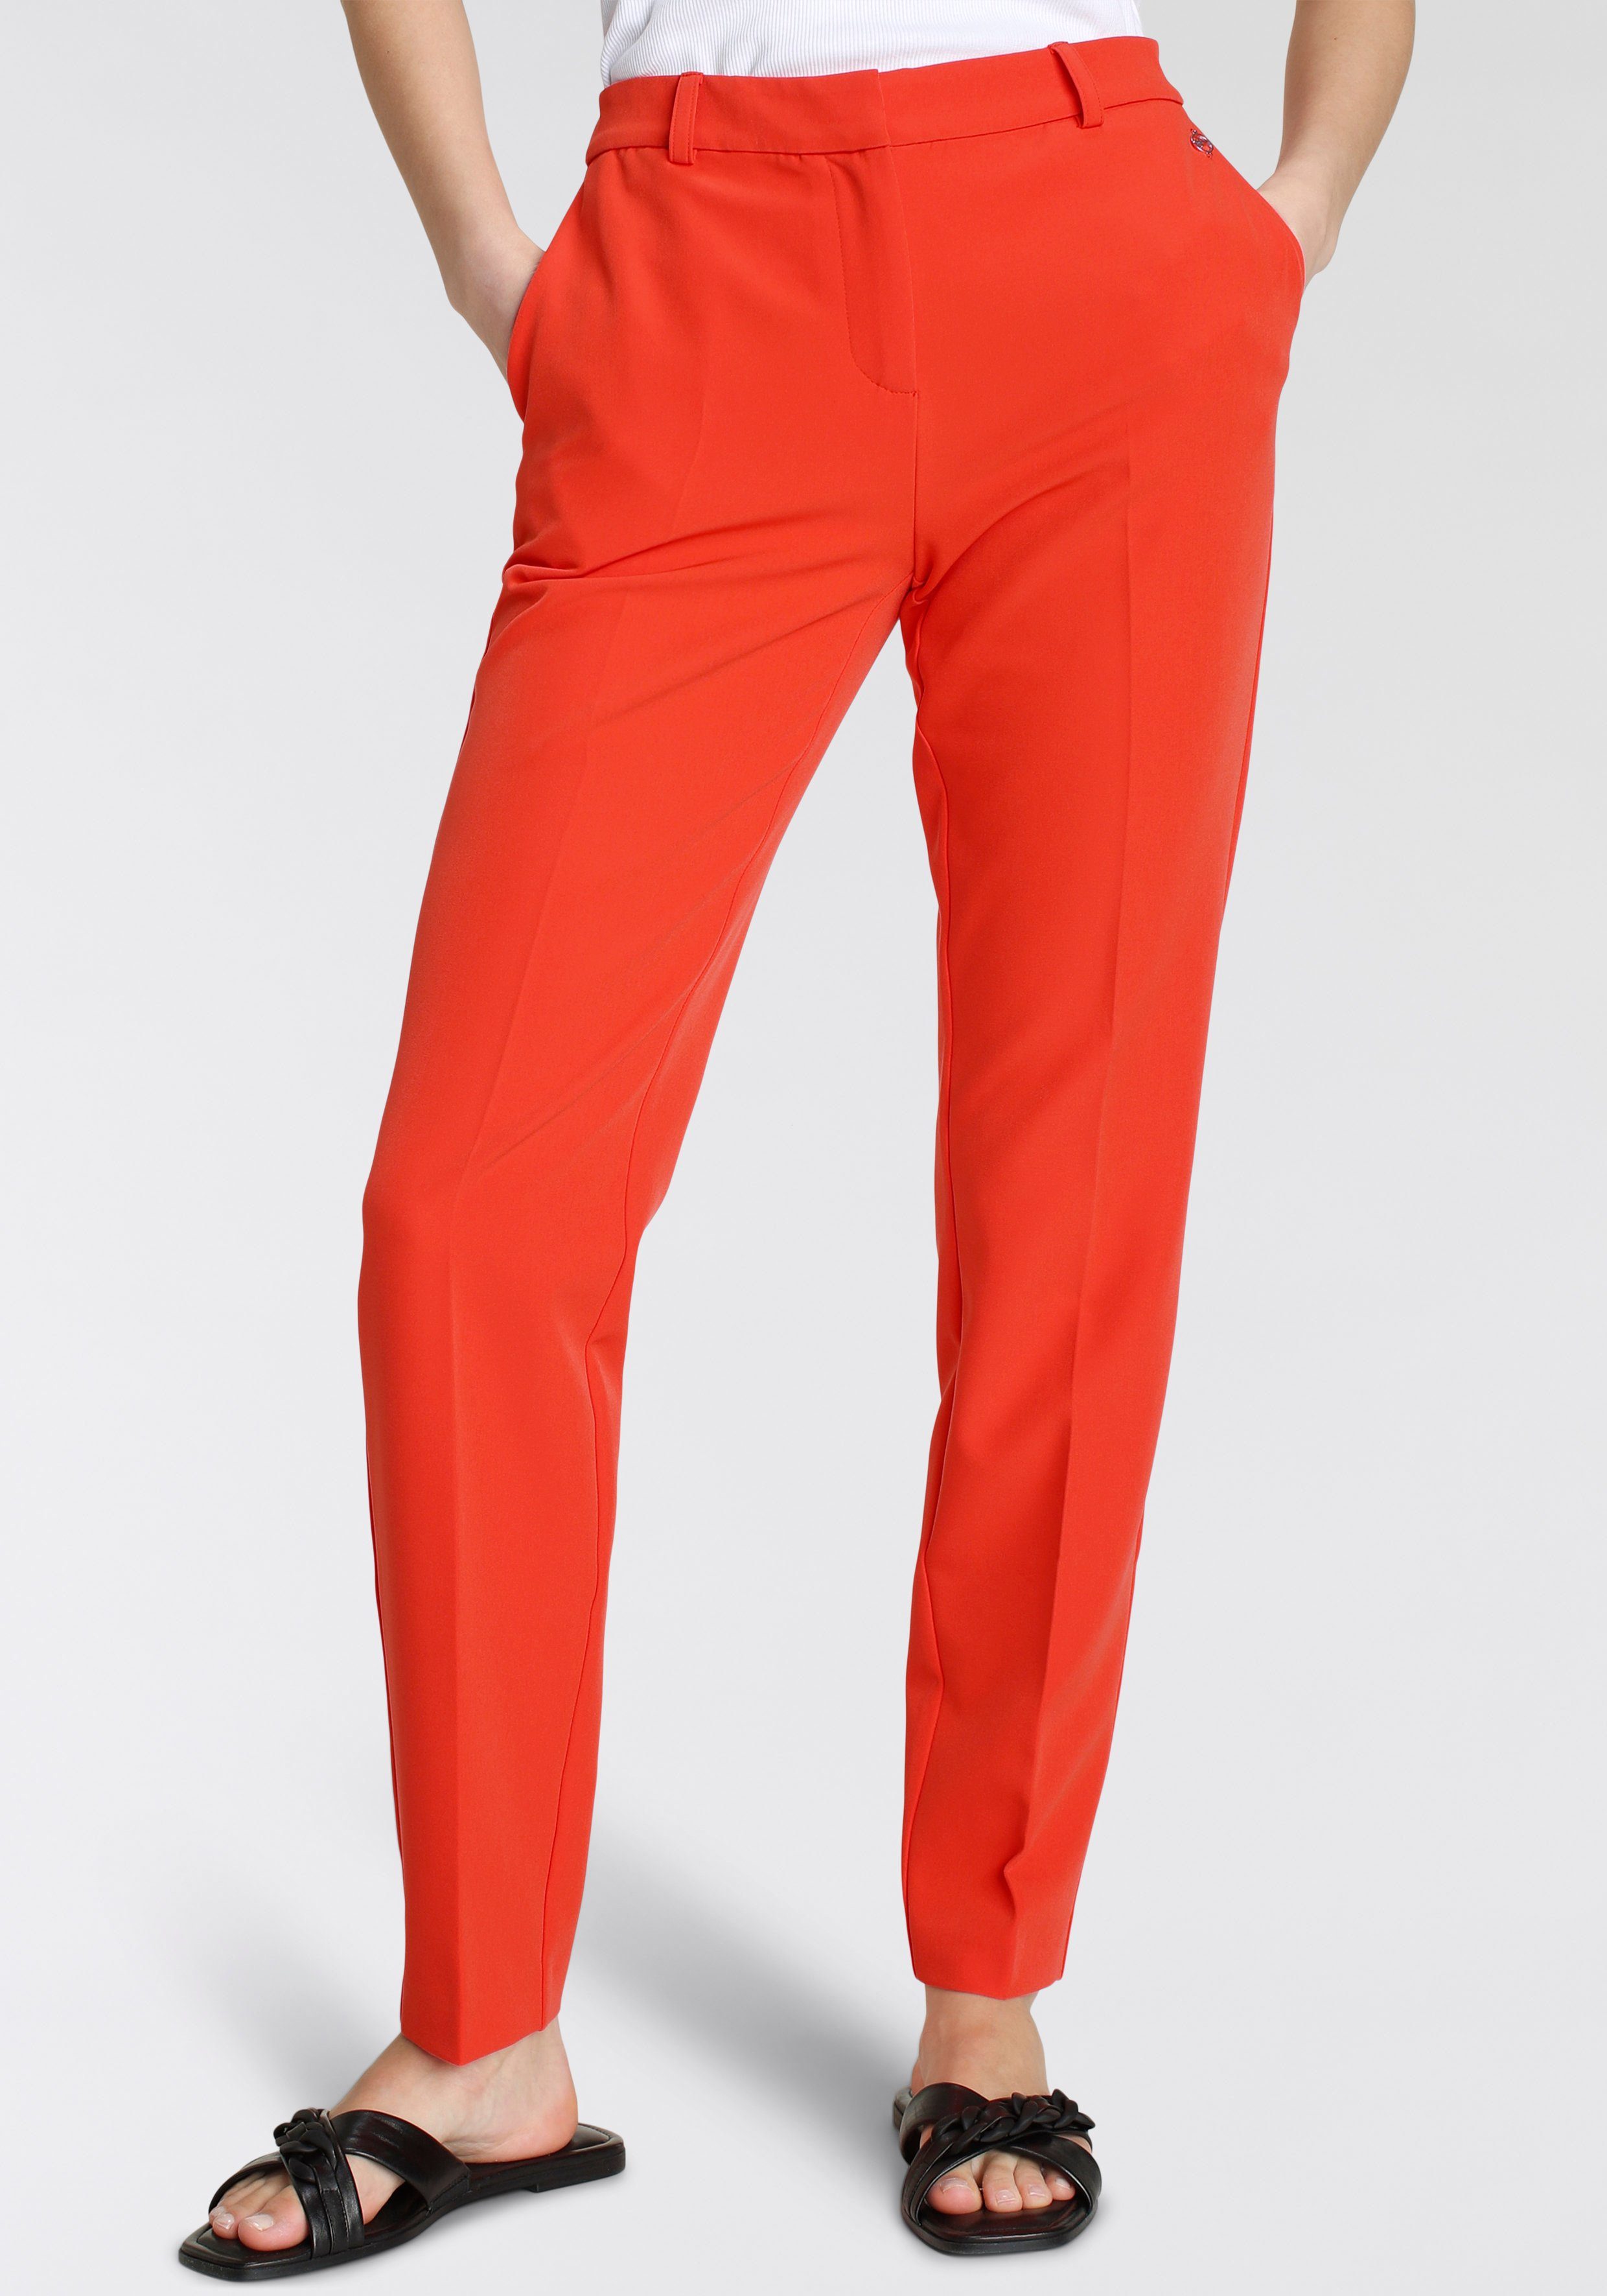 Tamaris Anzughose in Trendfarben orange (Hose aus nachhaltigem Material)